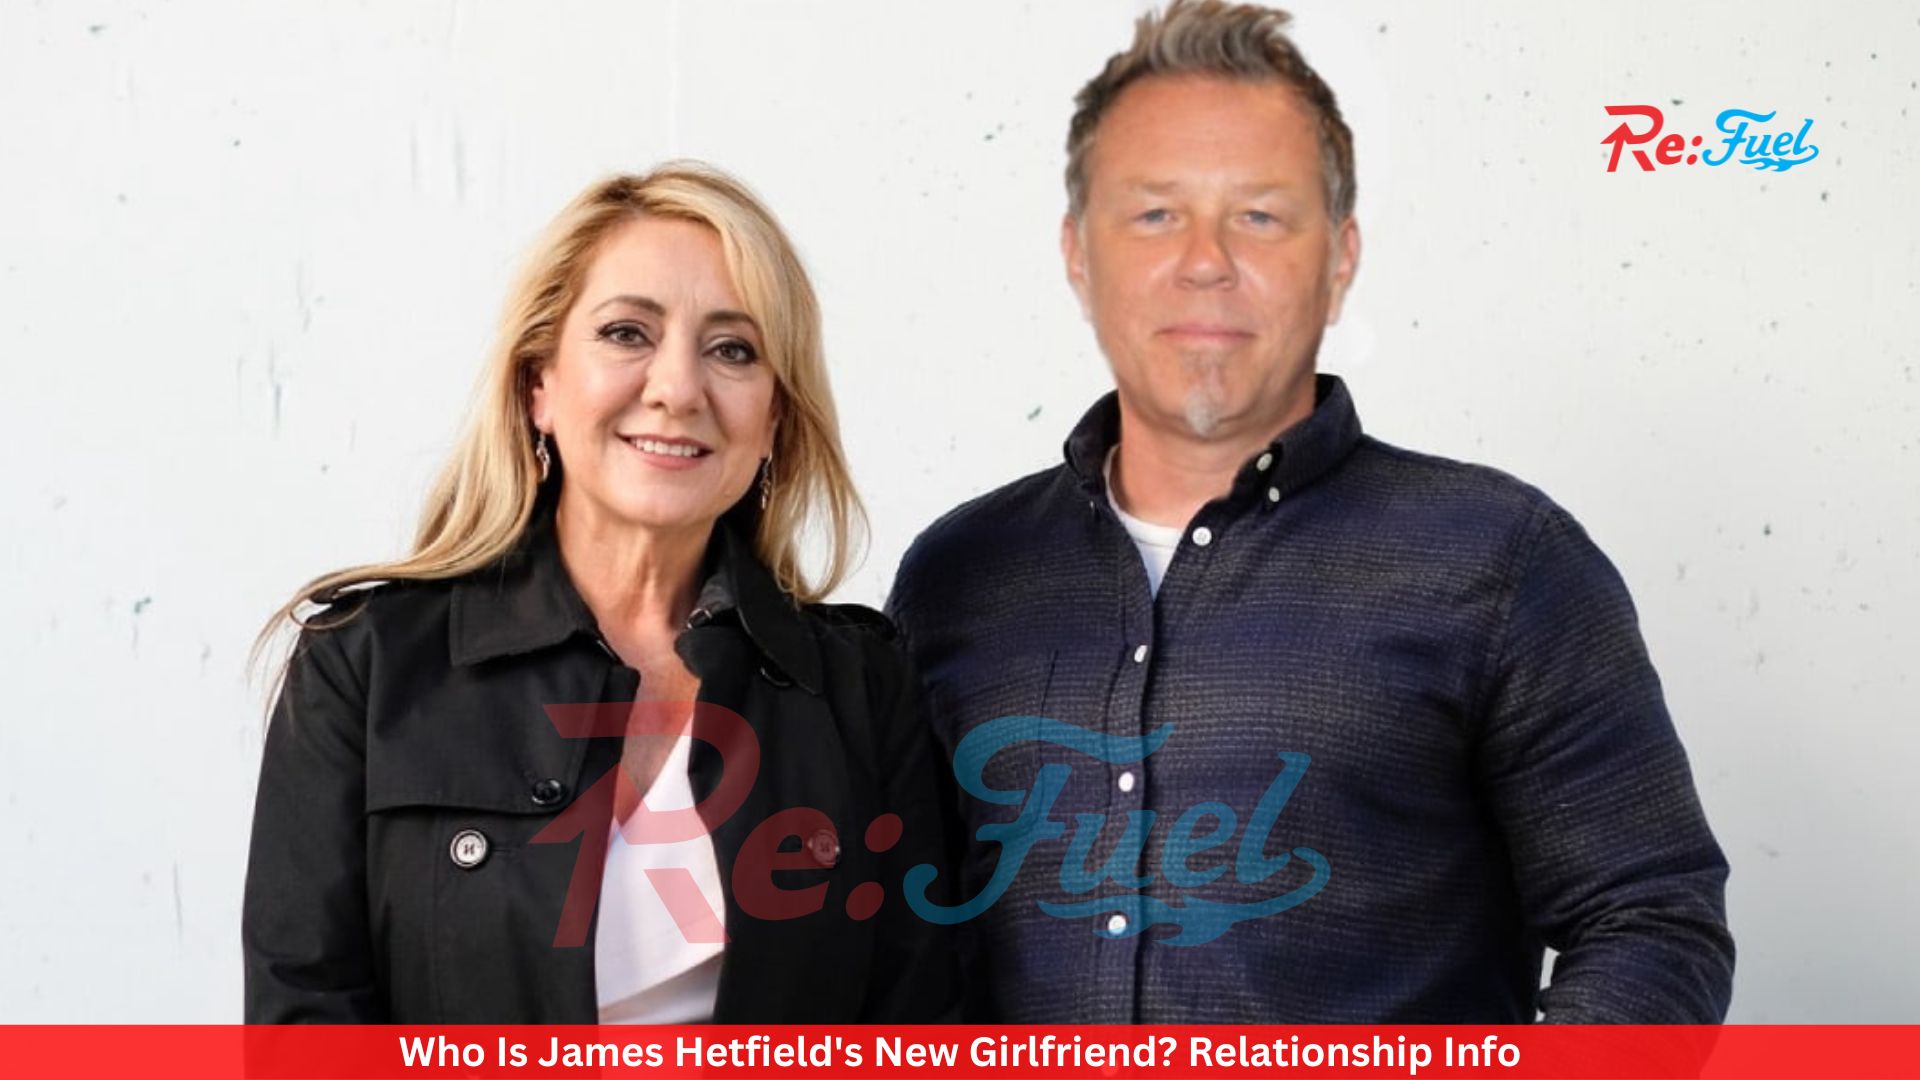 Who Is James Hetfield's New Girlfriend? Relationship Info